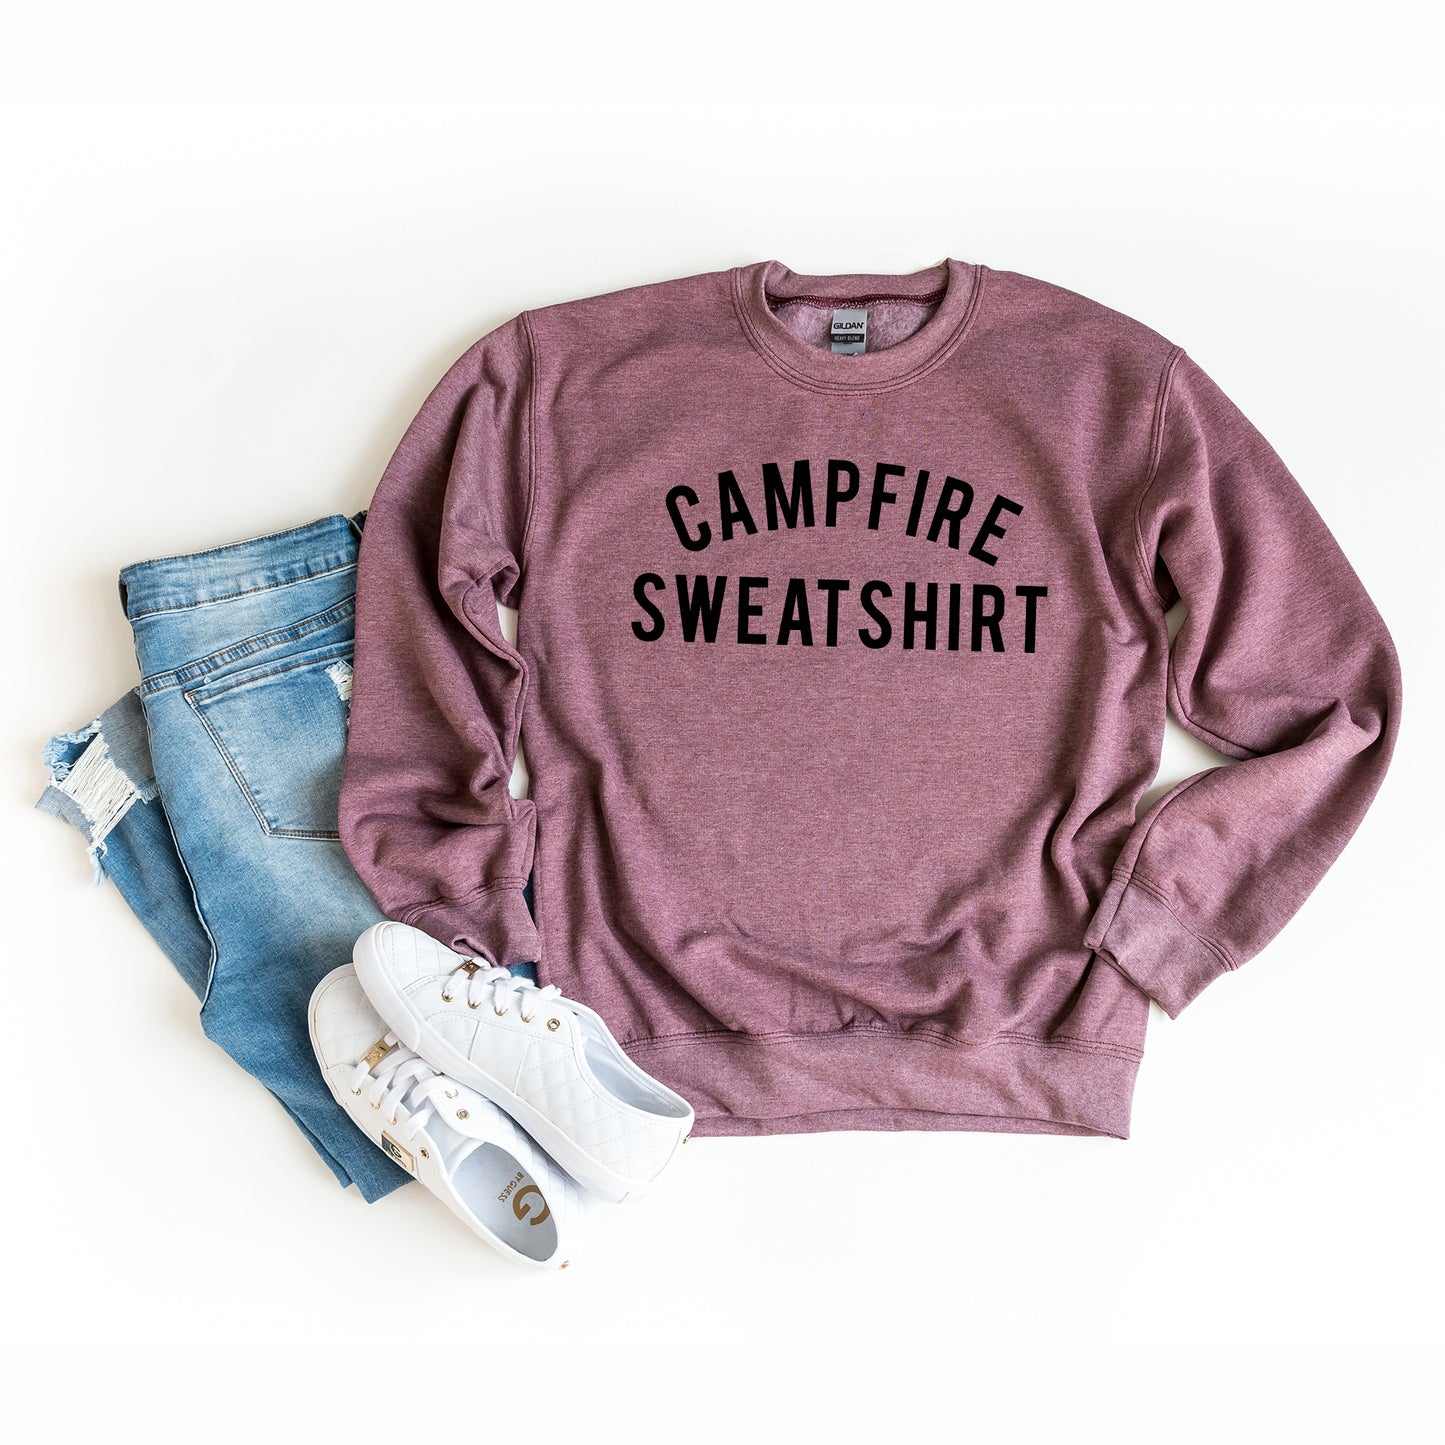 Campfire Sweatshirt | Sweatshirt